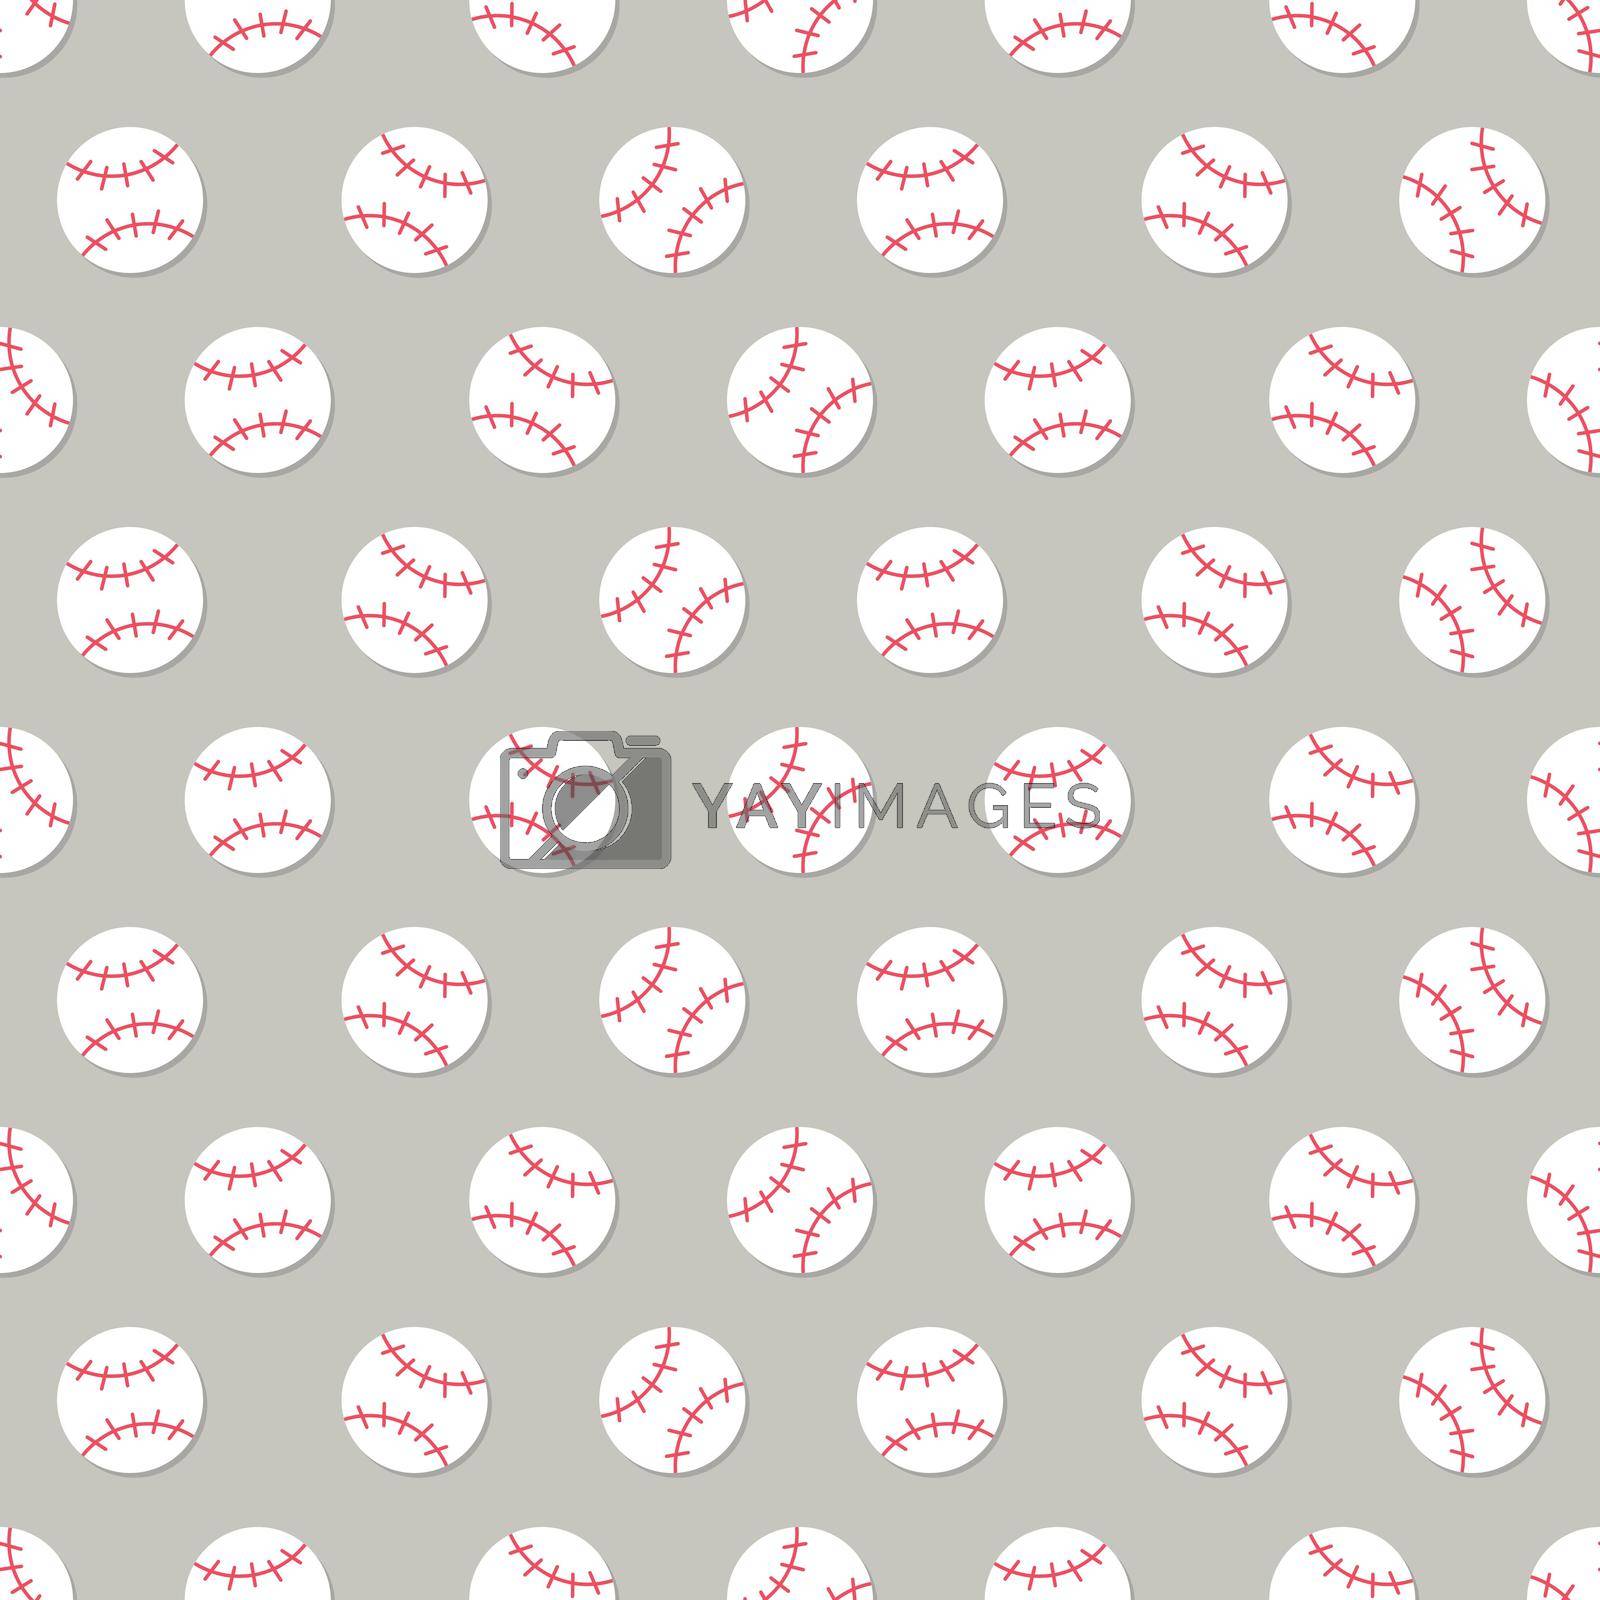 Royalty free image of Seamless baseball ball cartoon pattern by valueinvestor